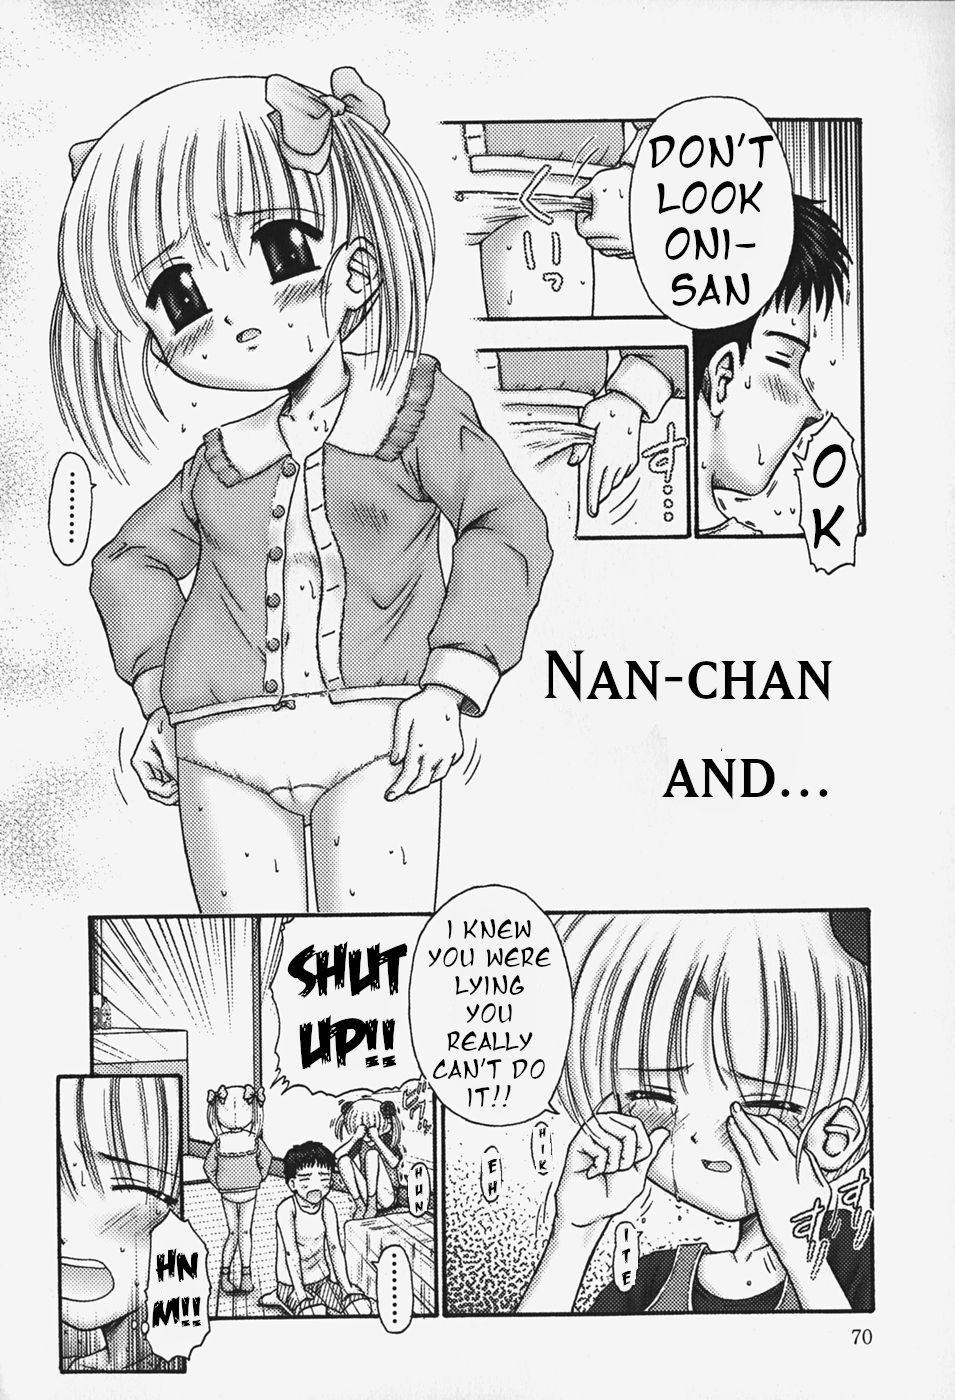 Nan-chan and... 1